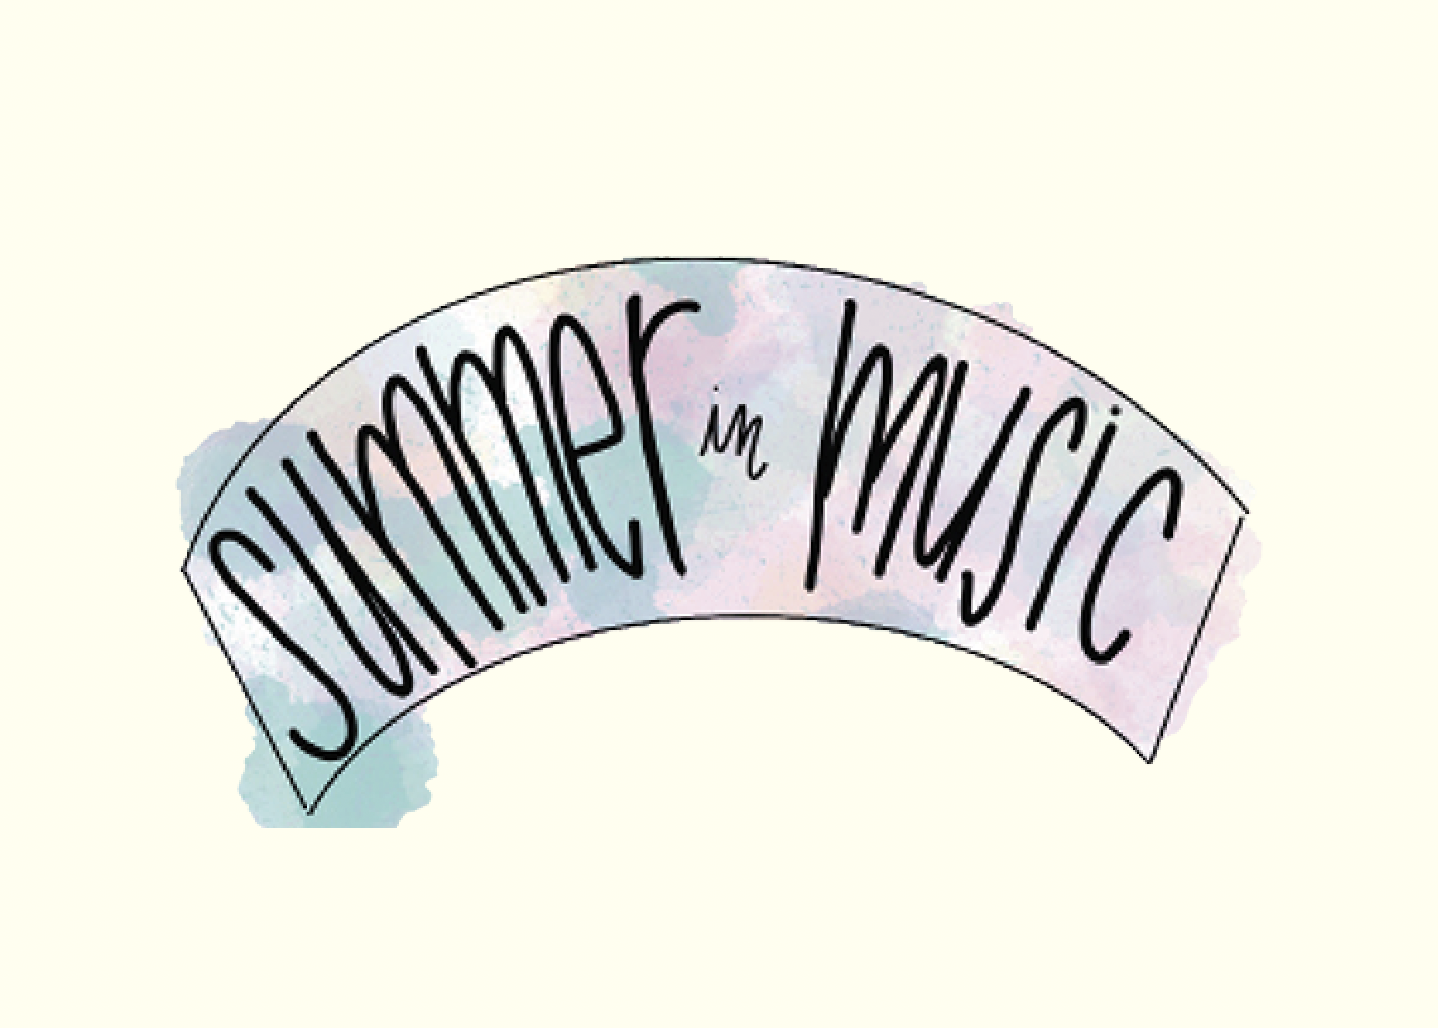 Summer in music